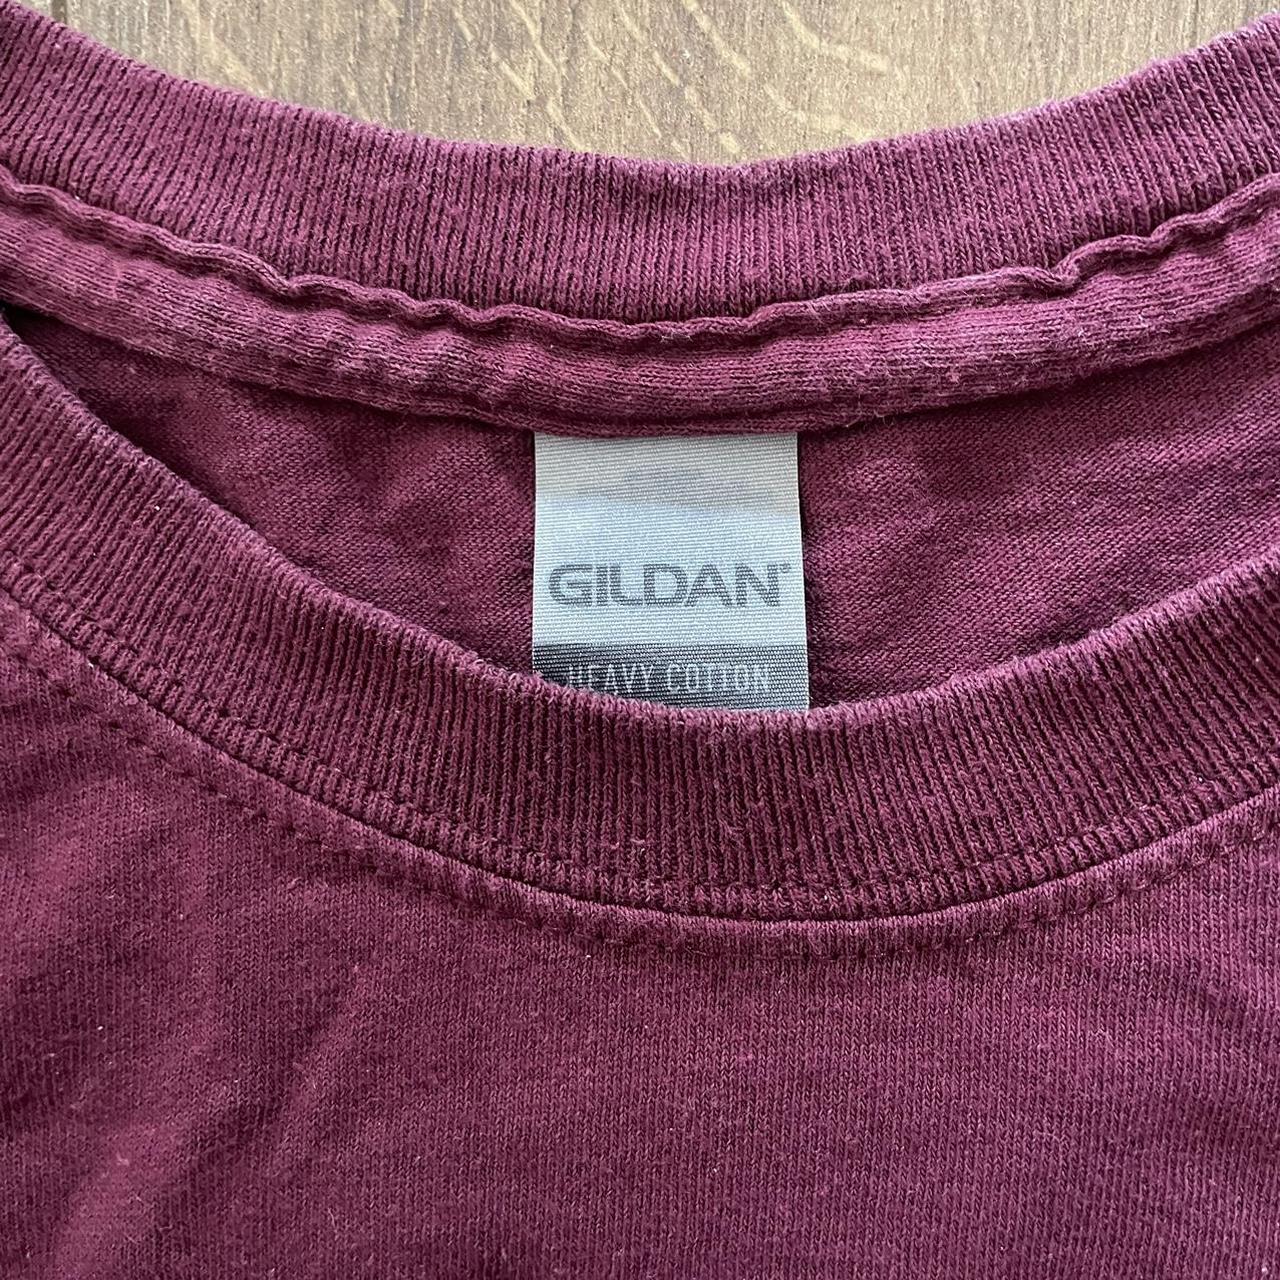 Gildan Men's Burgundy T-shirt | Depop